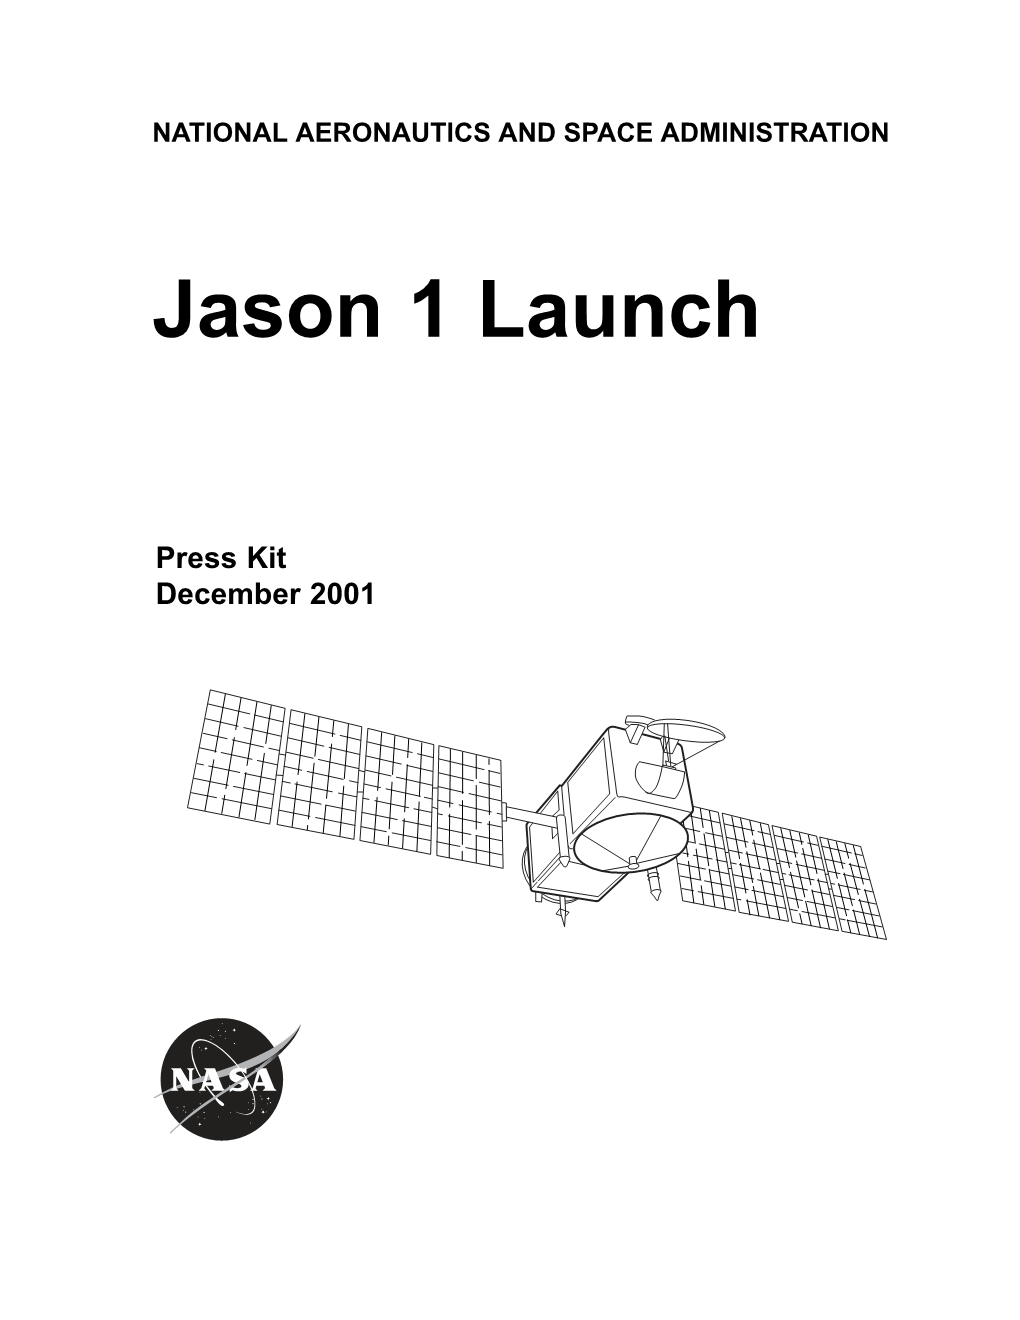 Jason 1 Launch